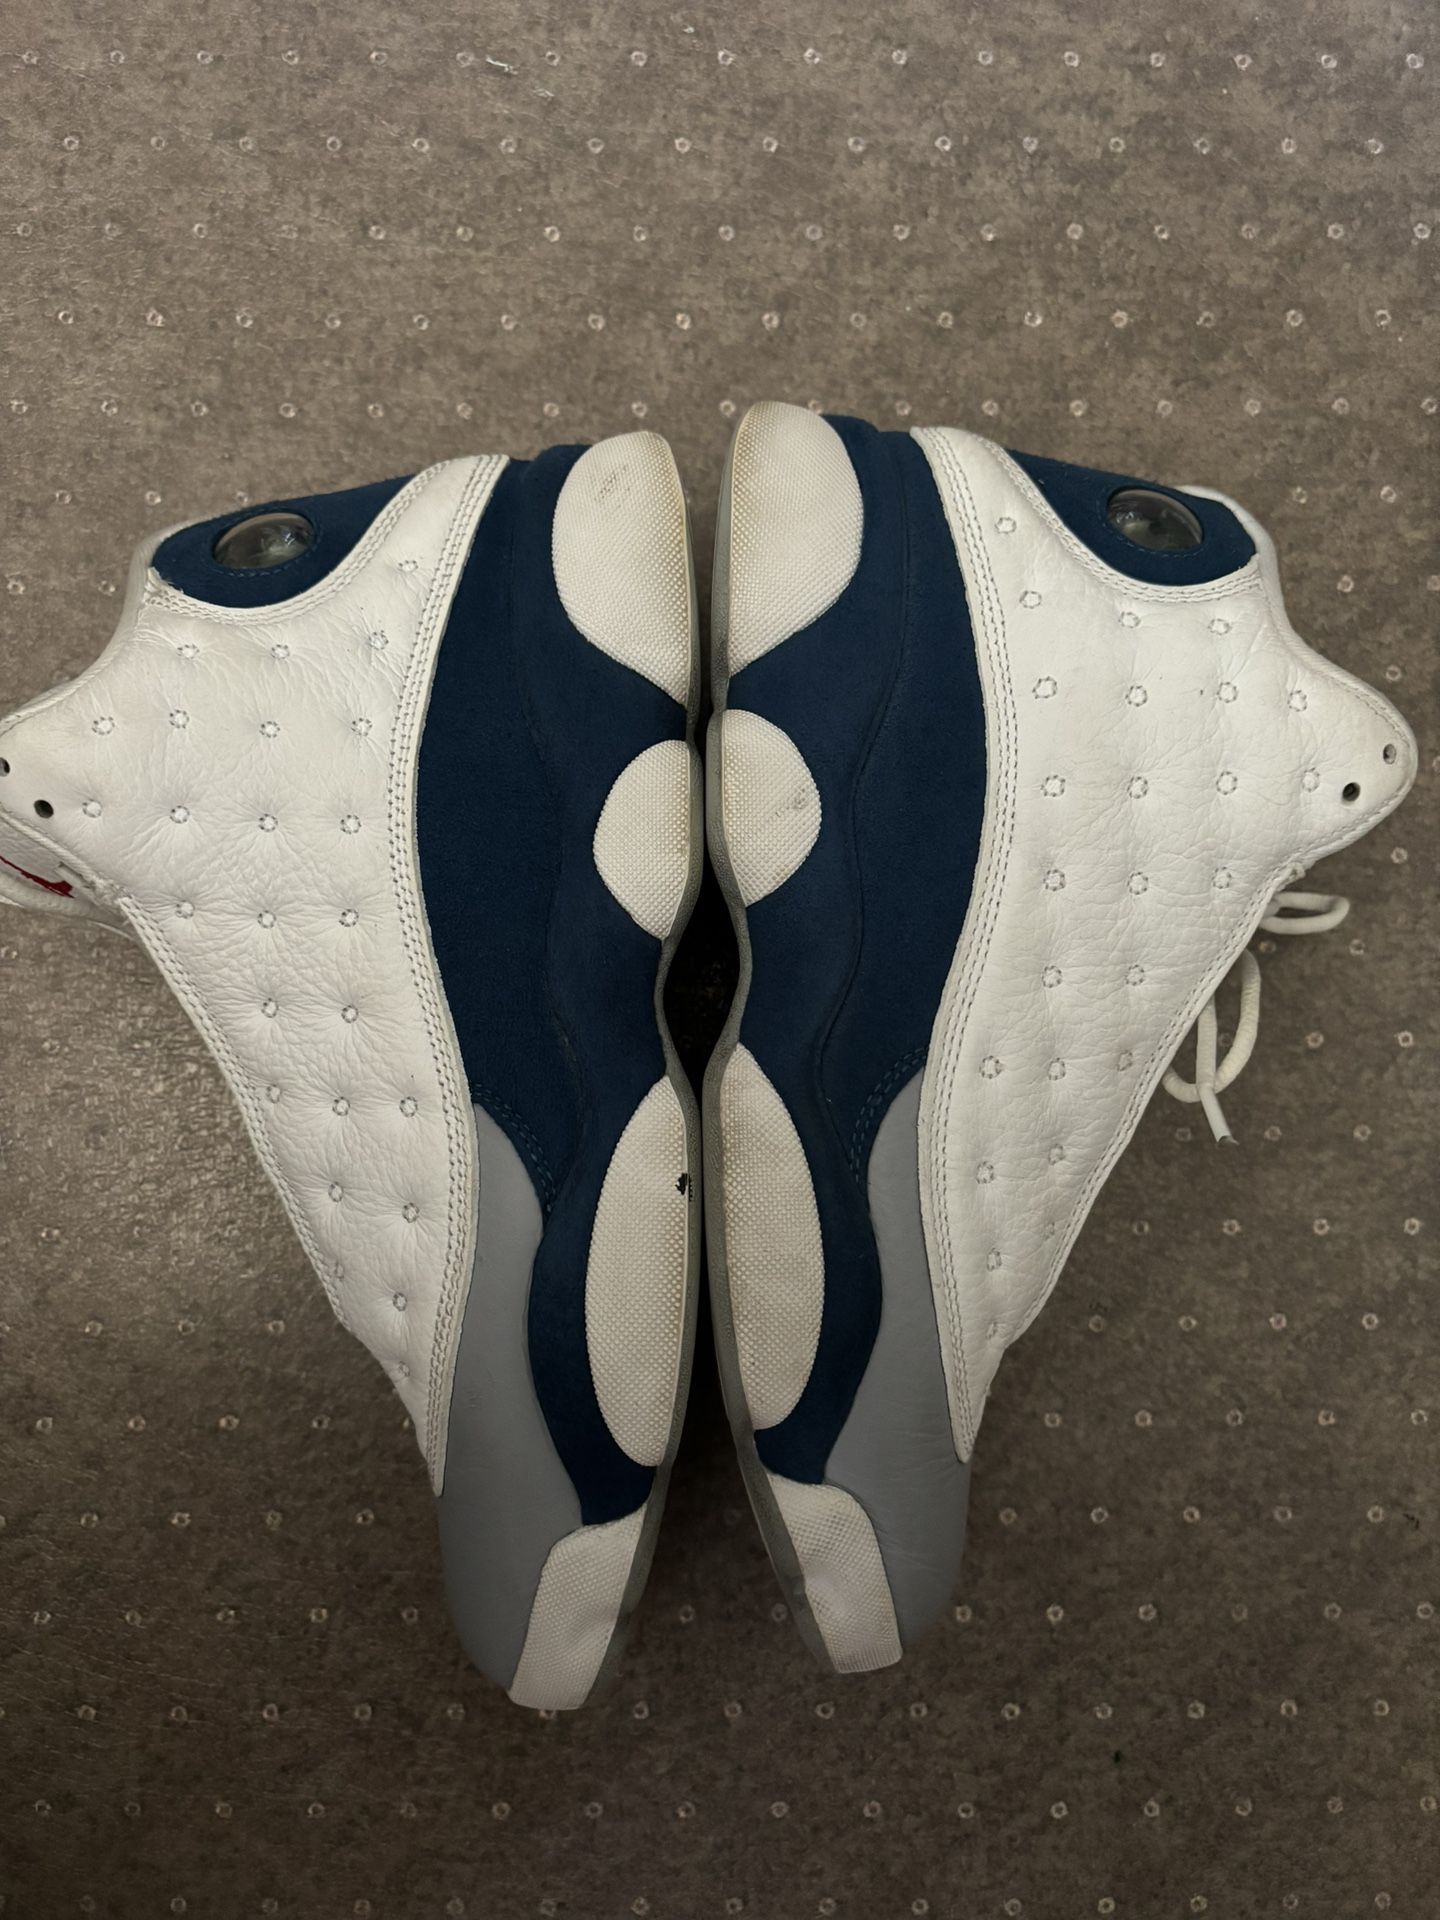 Jordan 13 Retro French Blue, Size 9.5